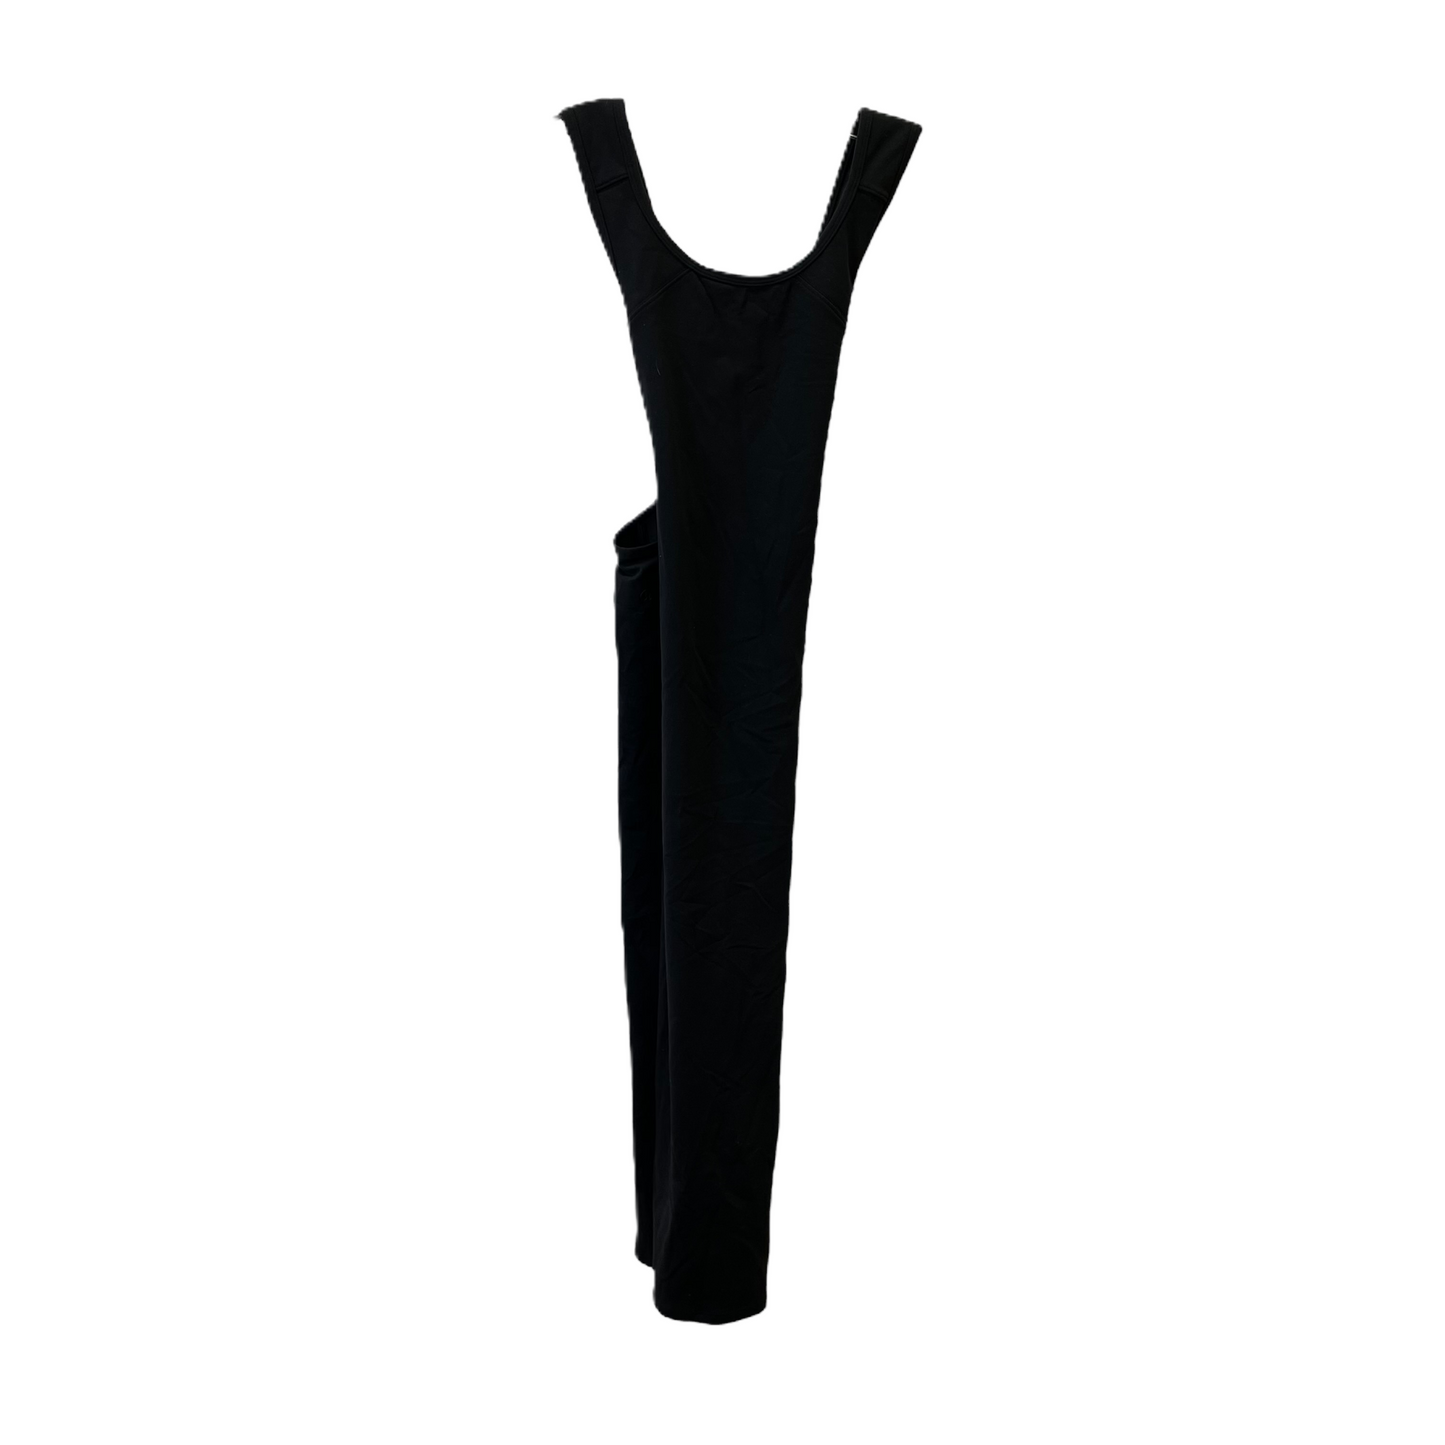 Black Athletic Dress By Lululemon, Size: S